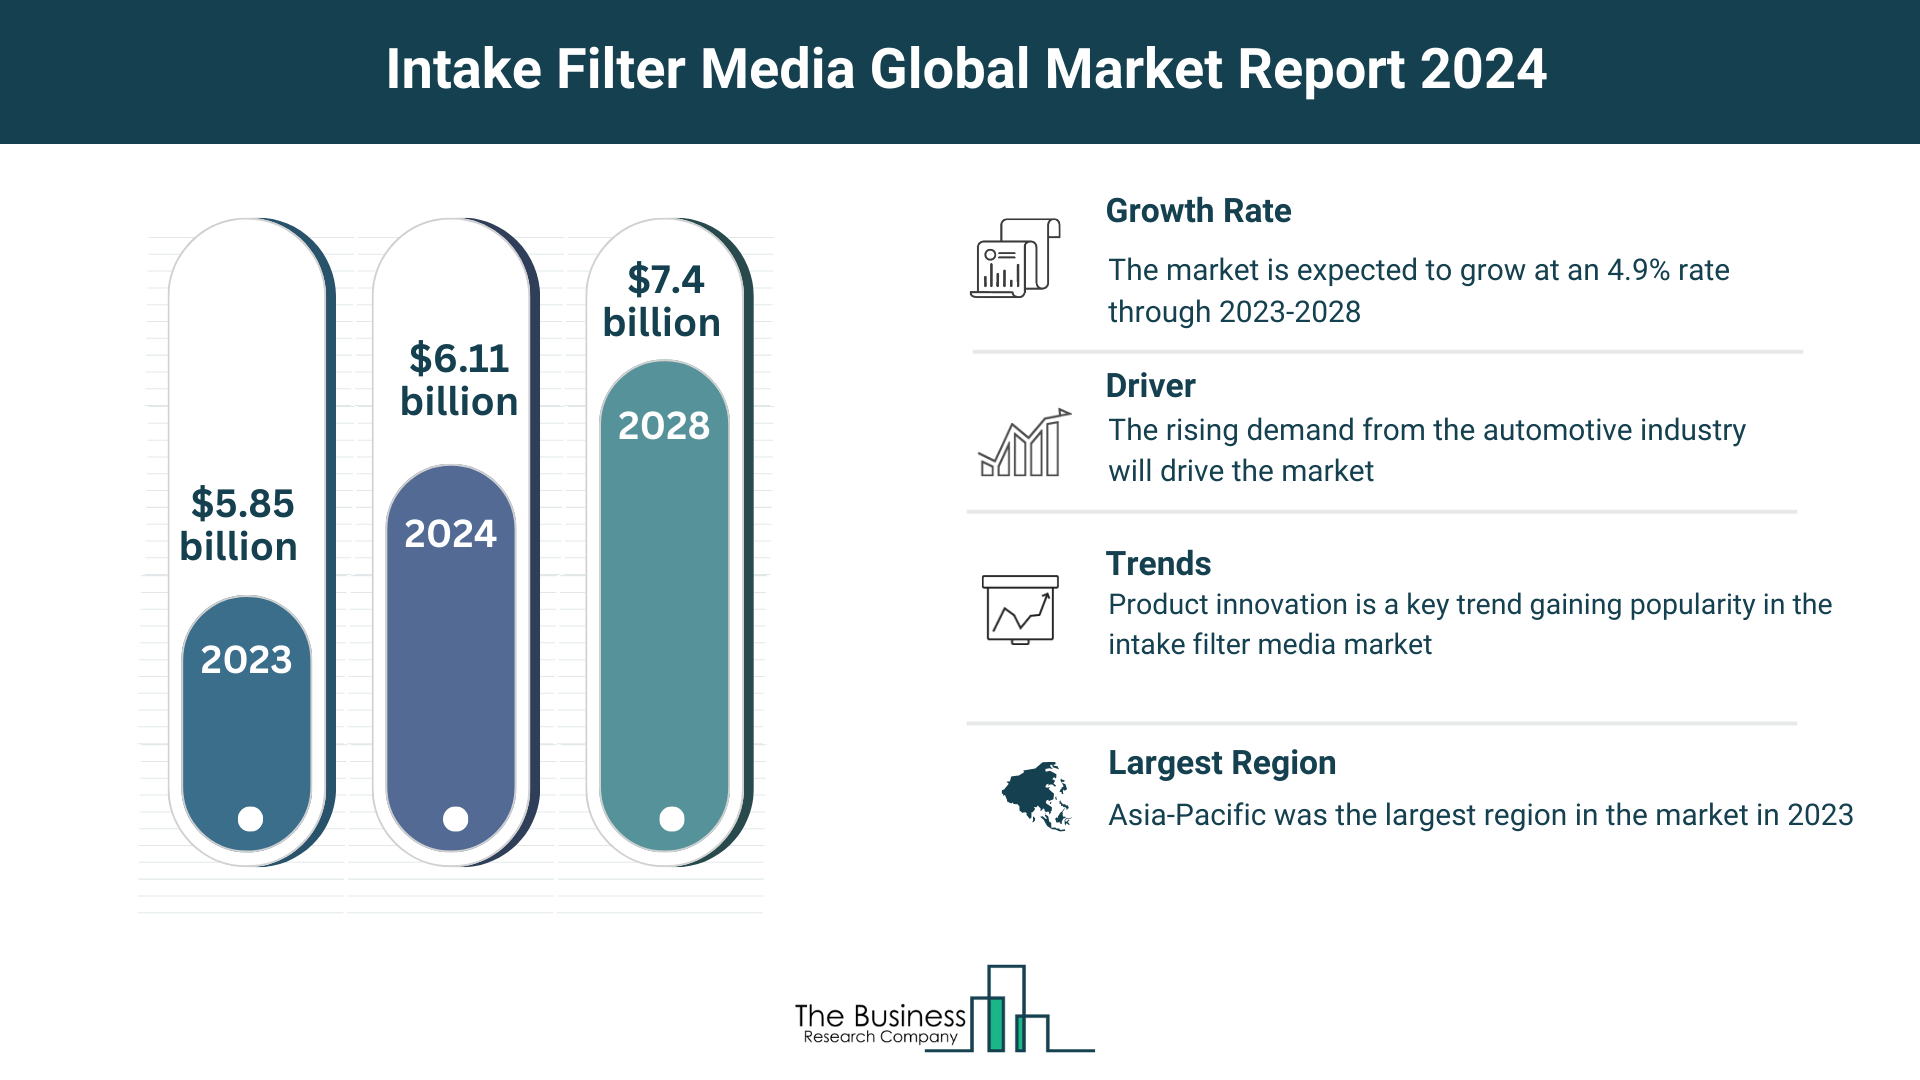 Global Intake Filter Media Market